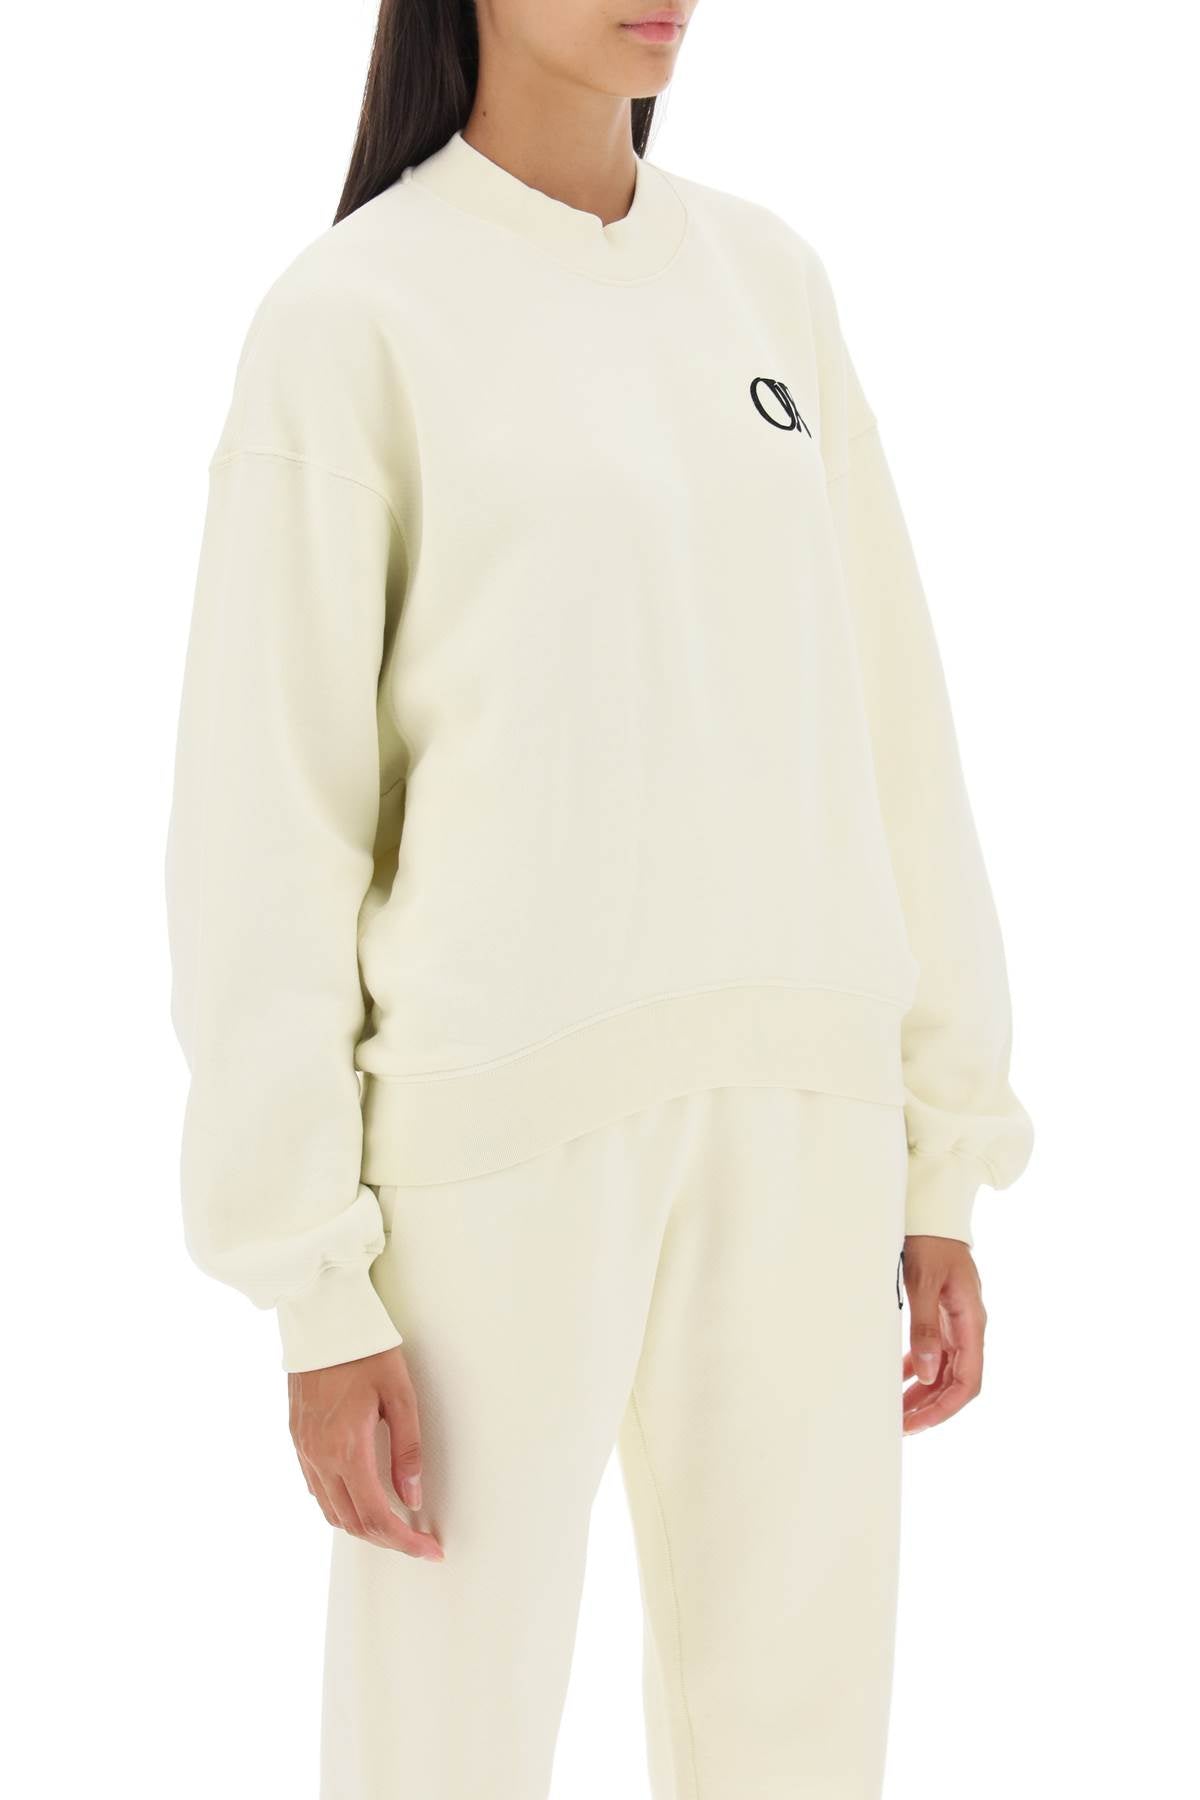 Off-white crew-neck sweatshirt with flocked logo-1